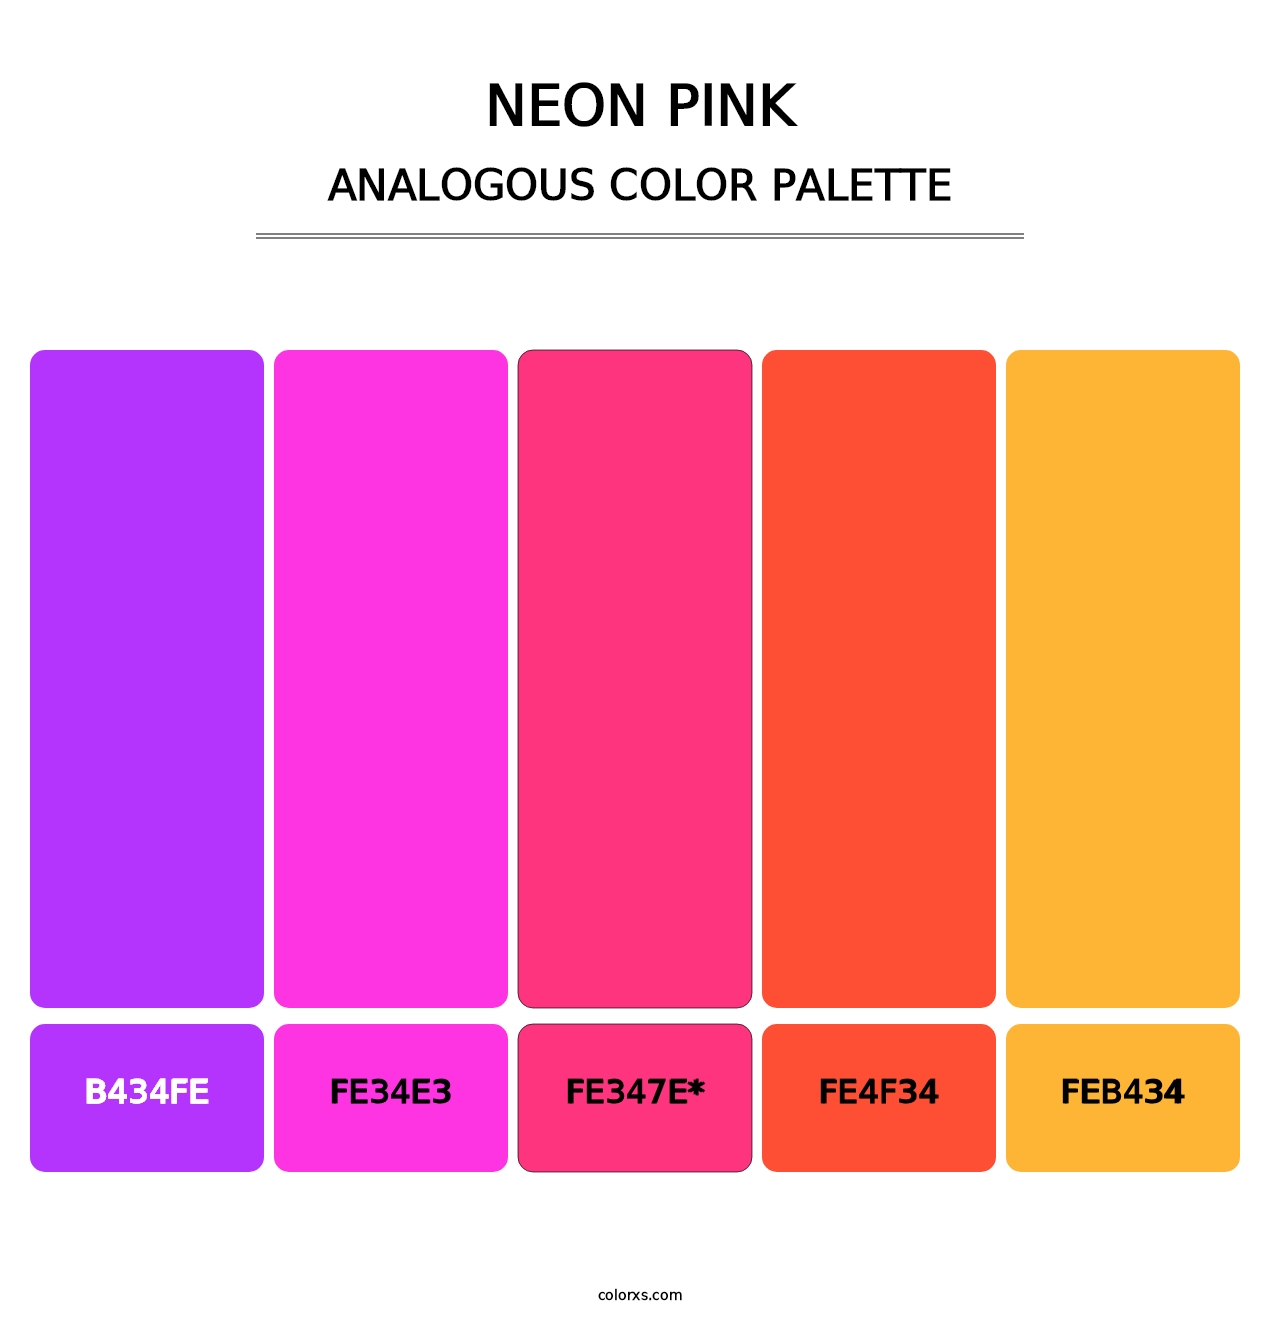 Neon Pink - Analogous Color Palette